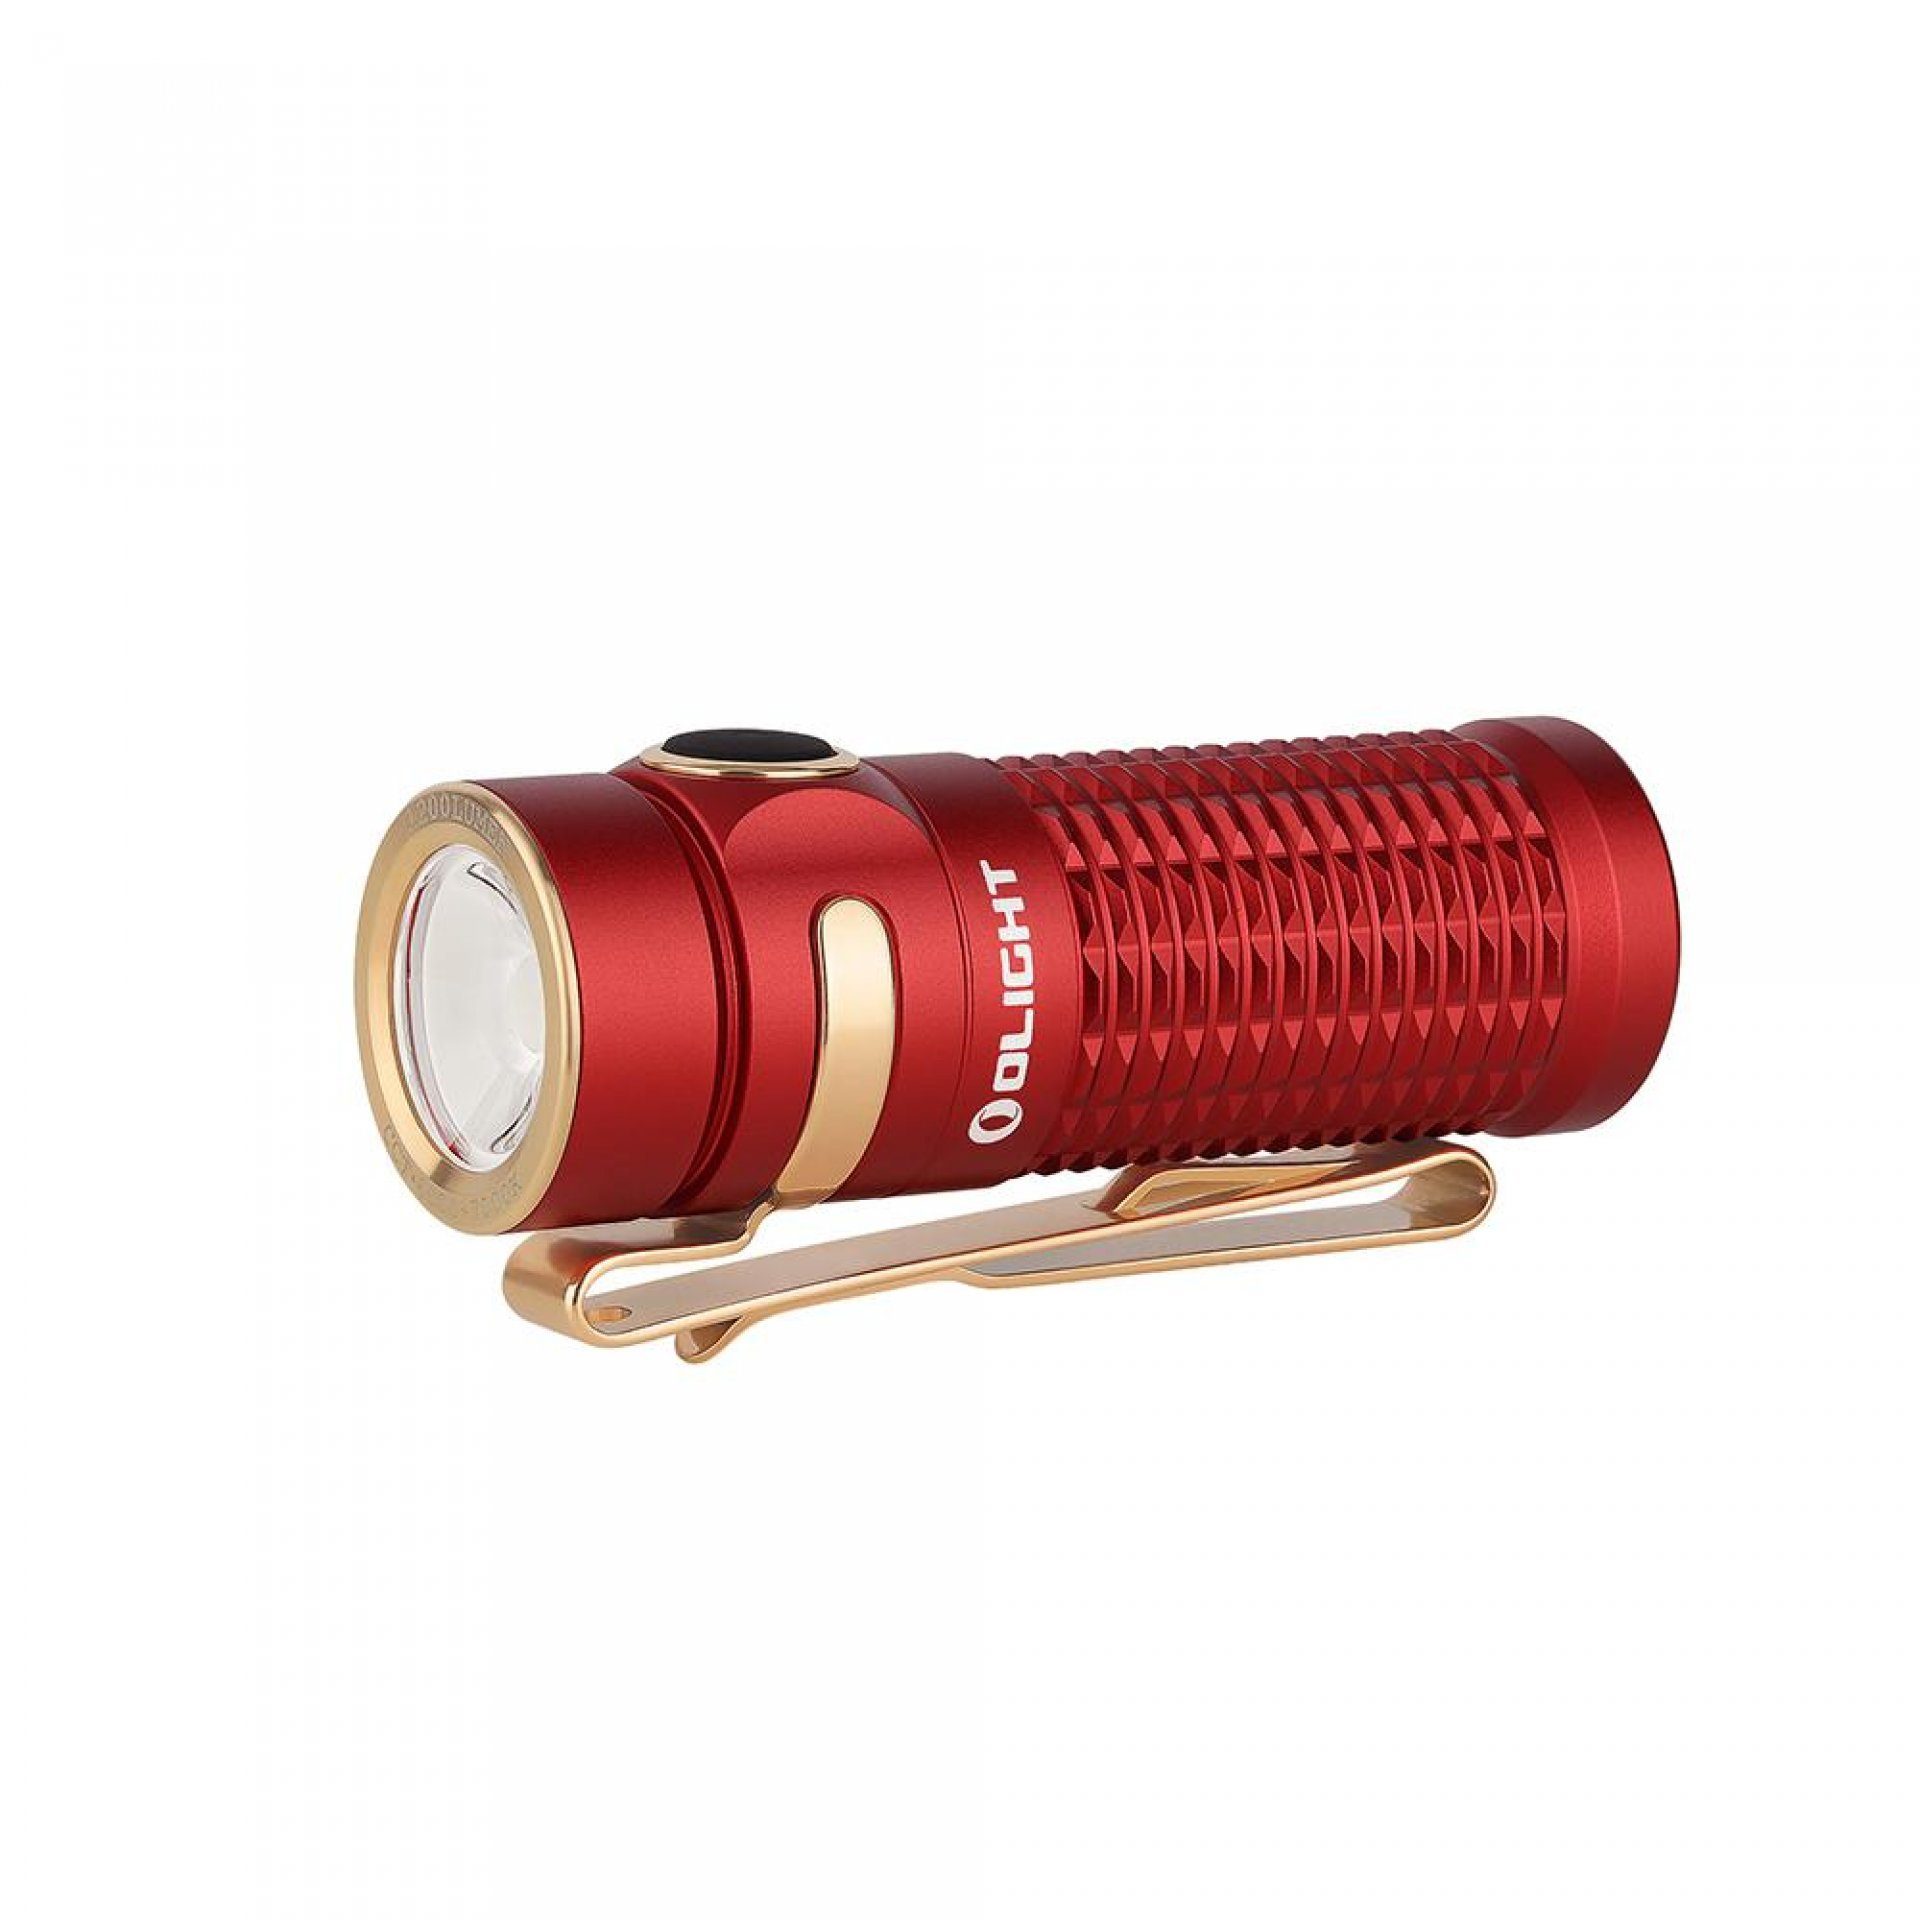 OLIGHT LED Taschenlampe OLIGHT Baton 3 LED Aufladbare Kaltweiße Taschenlampe rot